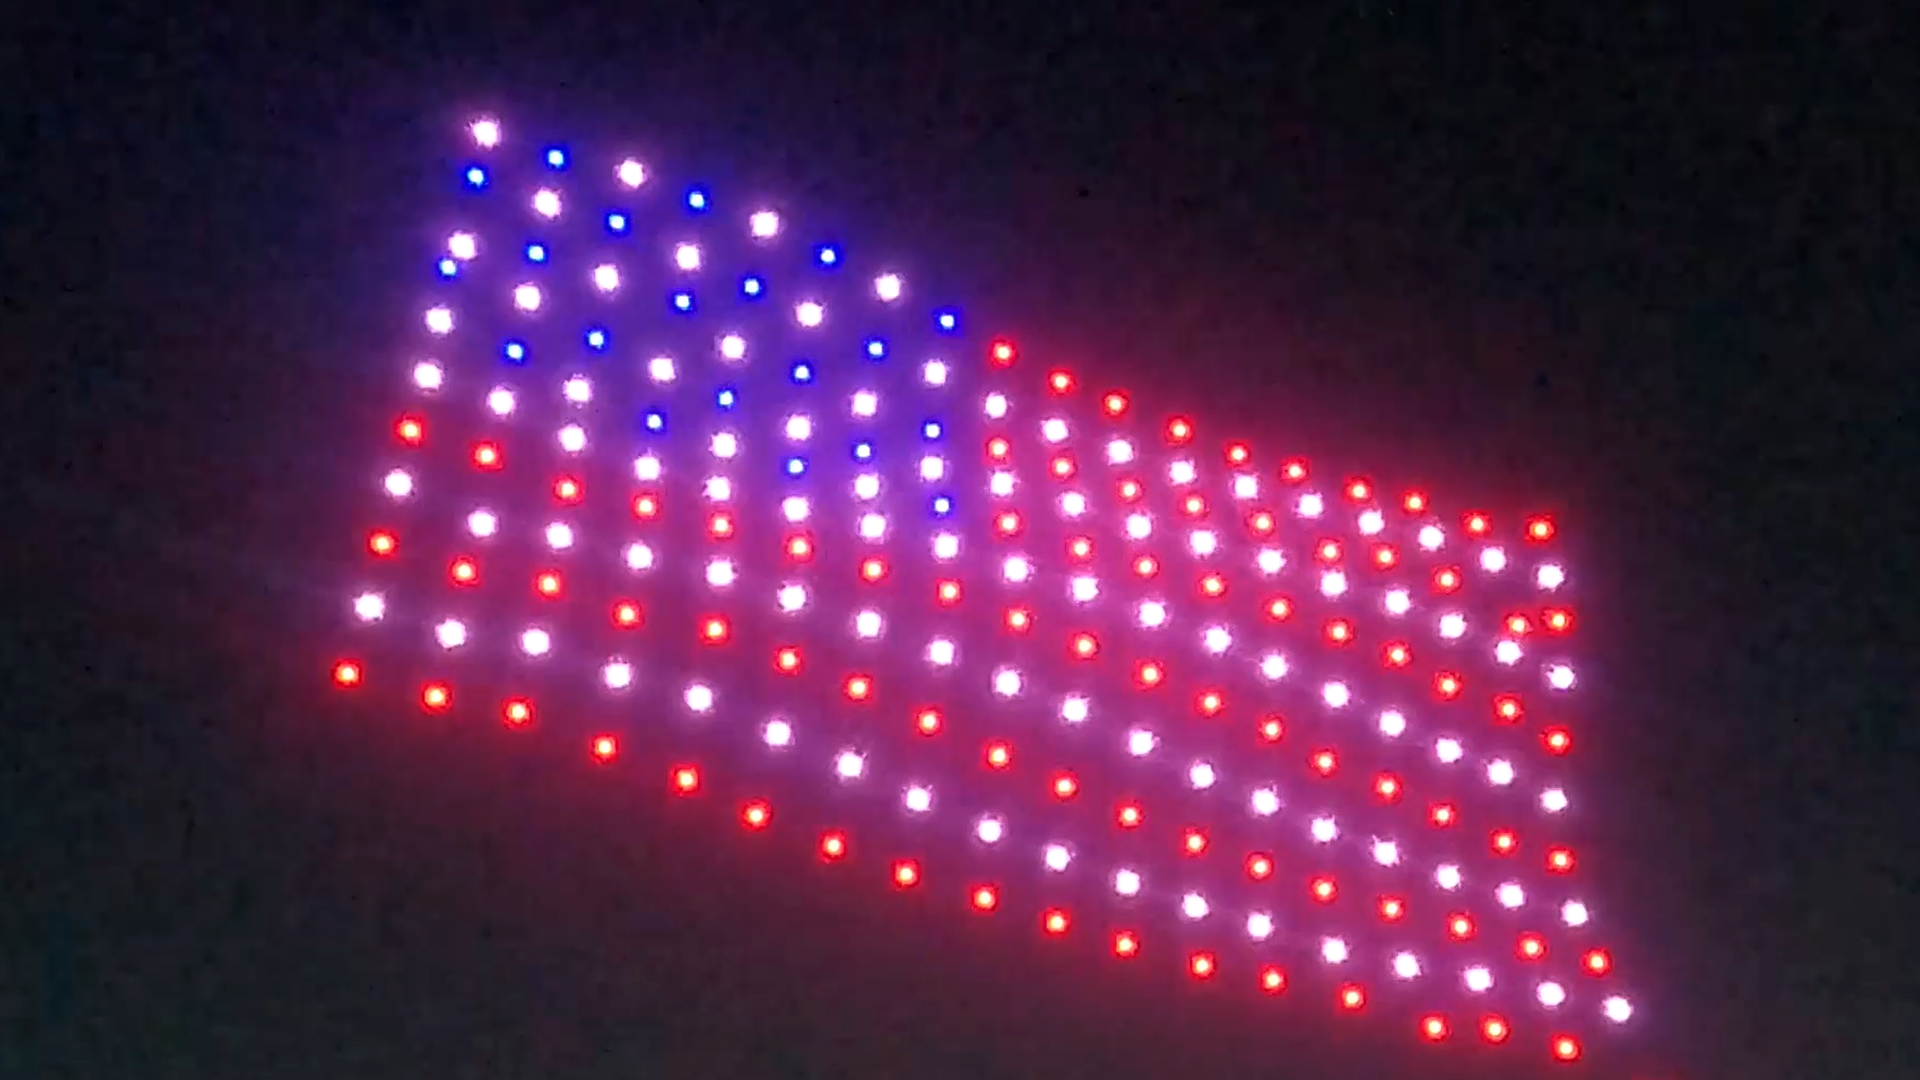 200 Drone Flag